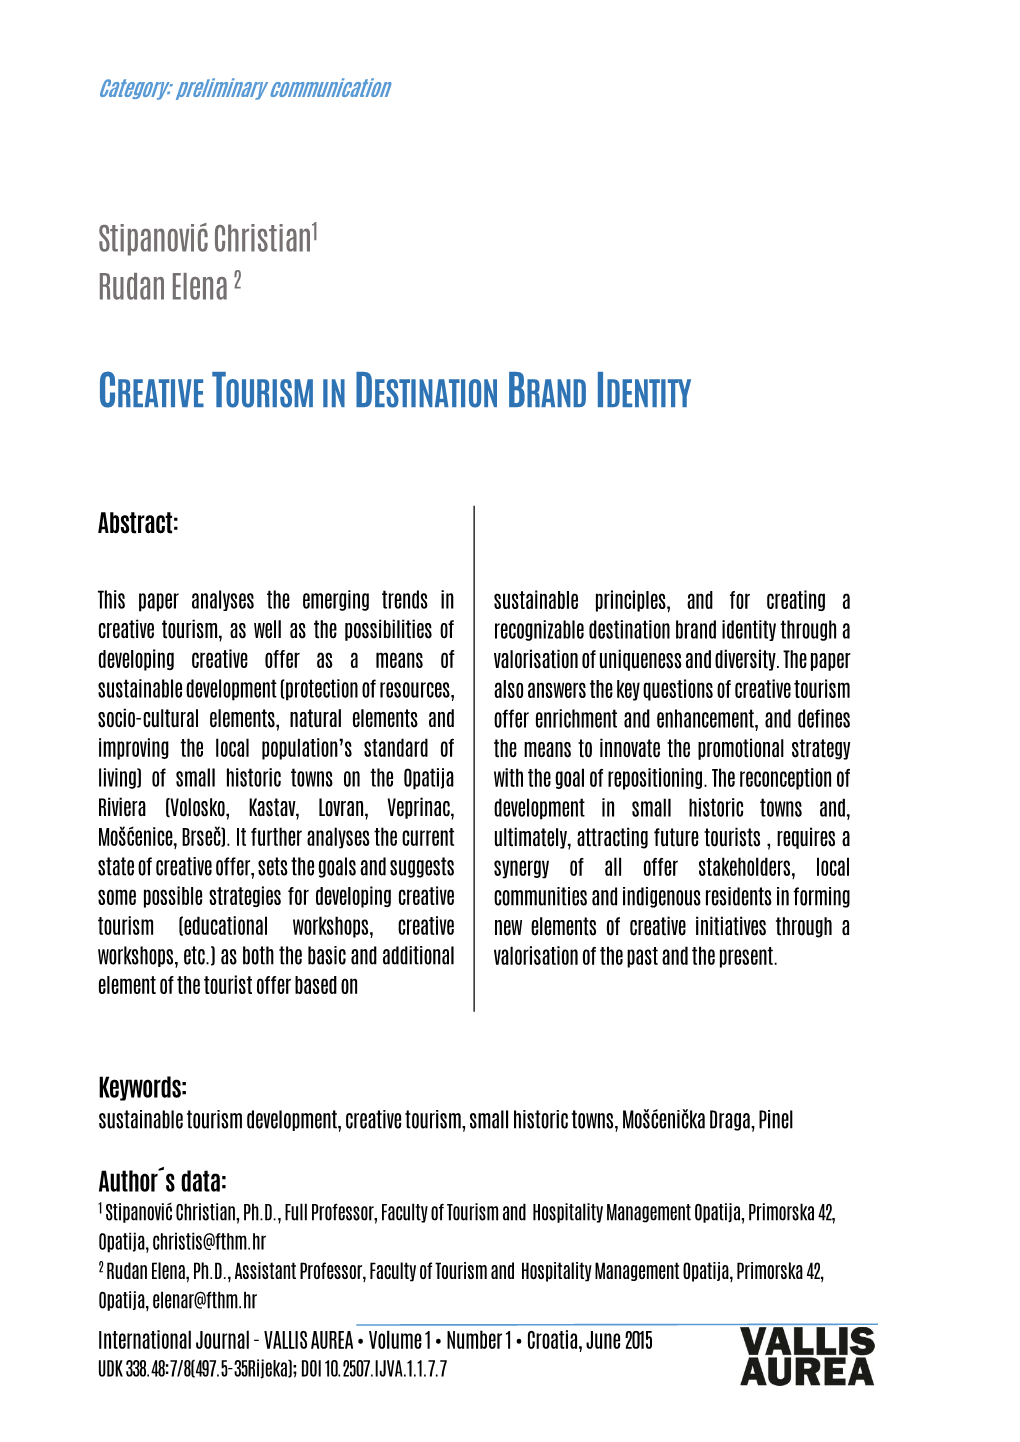 Creative Tourism in Destination Brand Identity